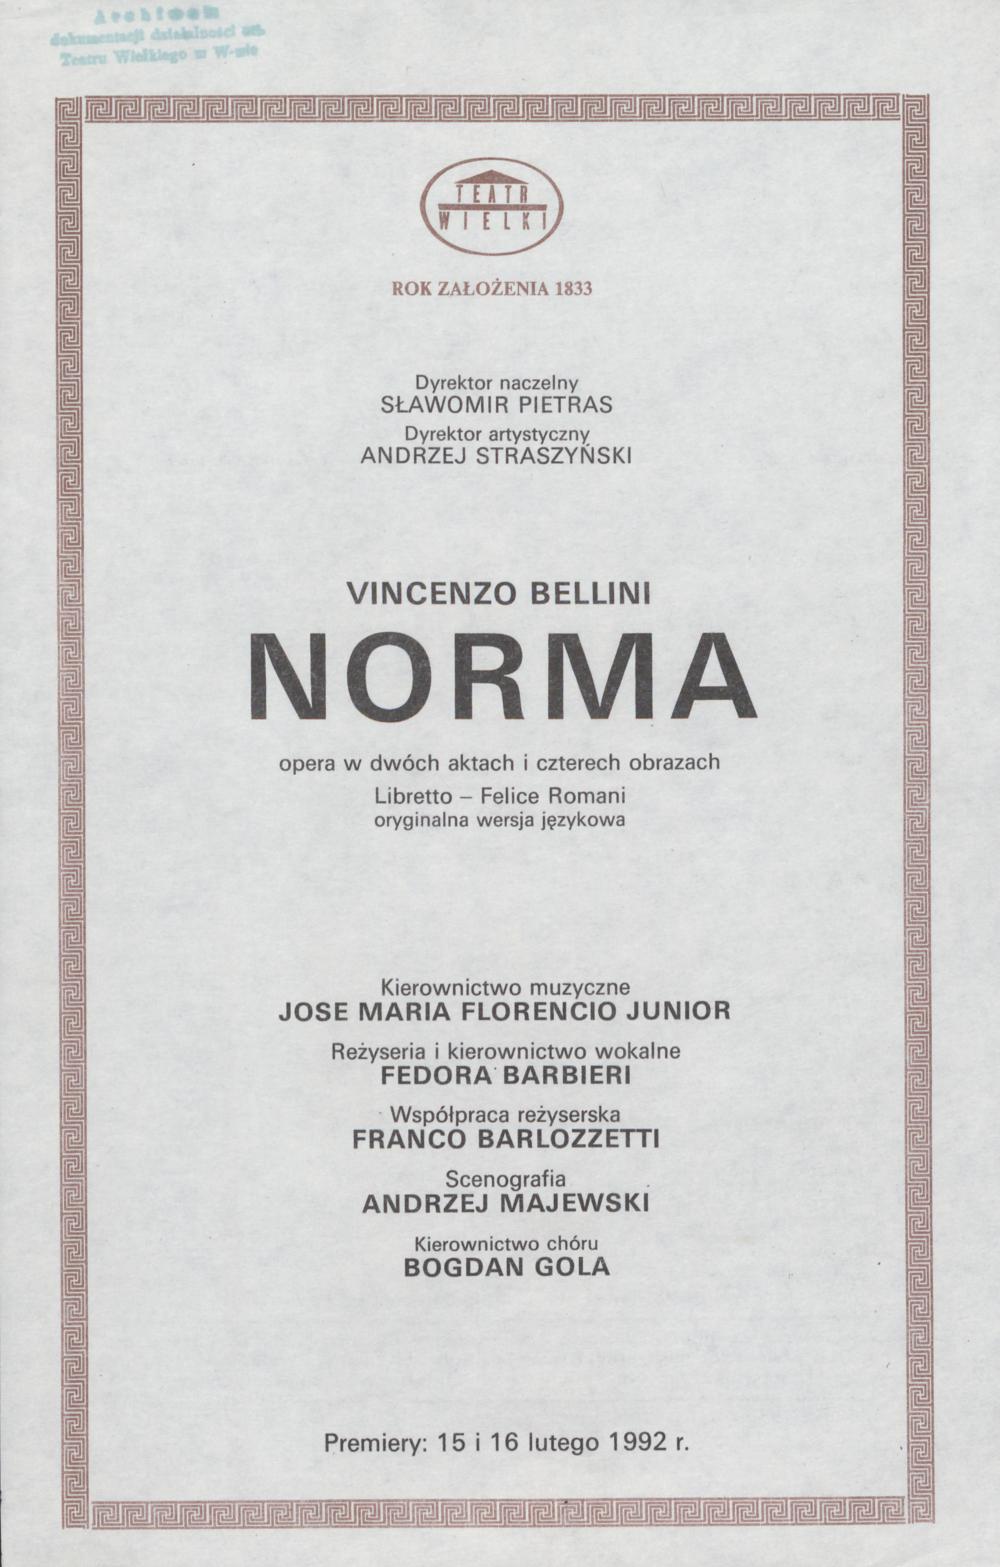 Wkładka obsadowa „Norma” Vincenzo Bellini 15-02-1992